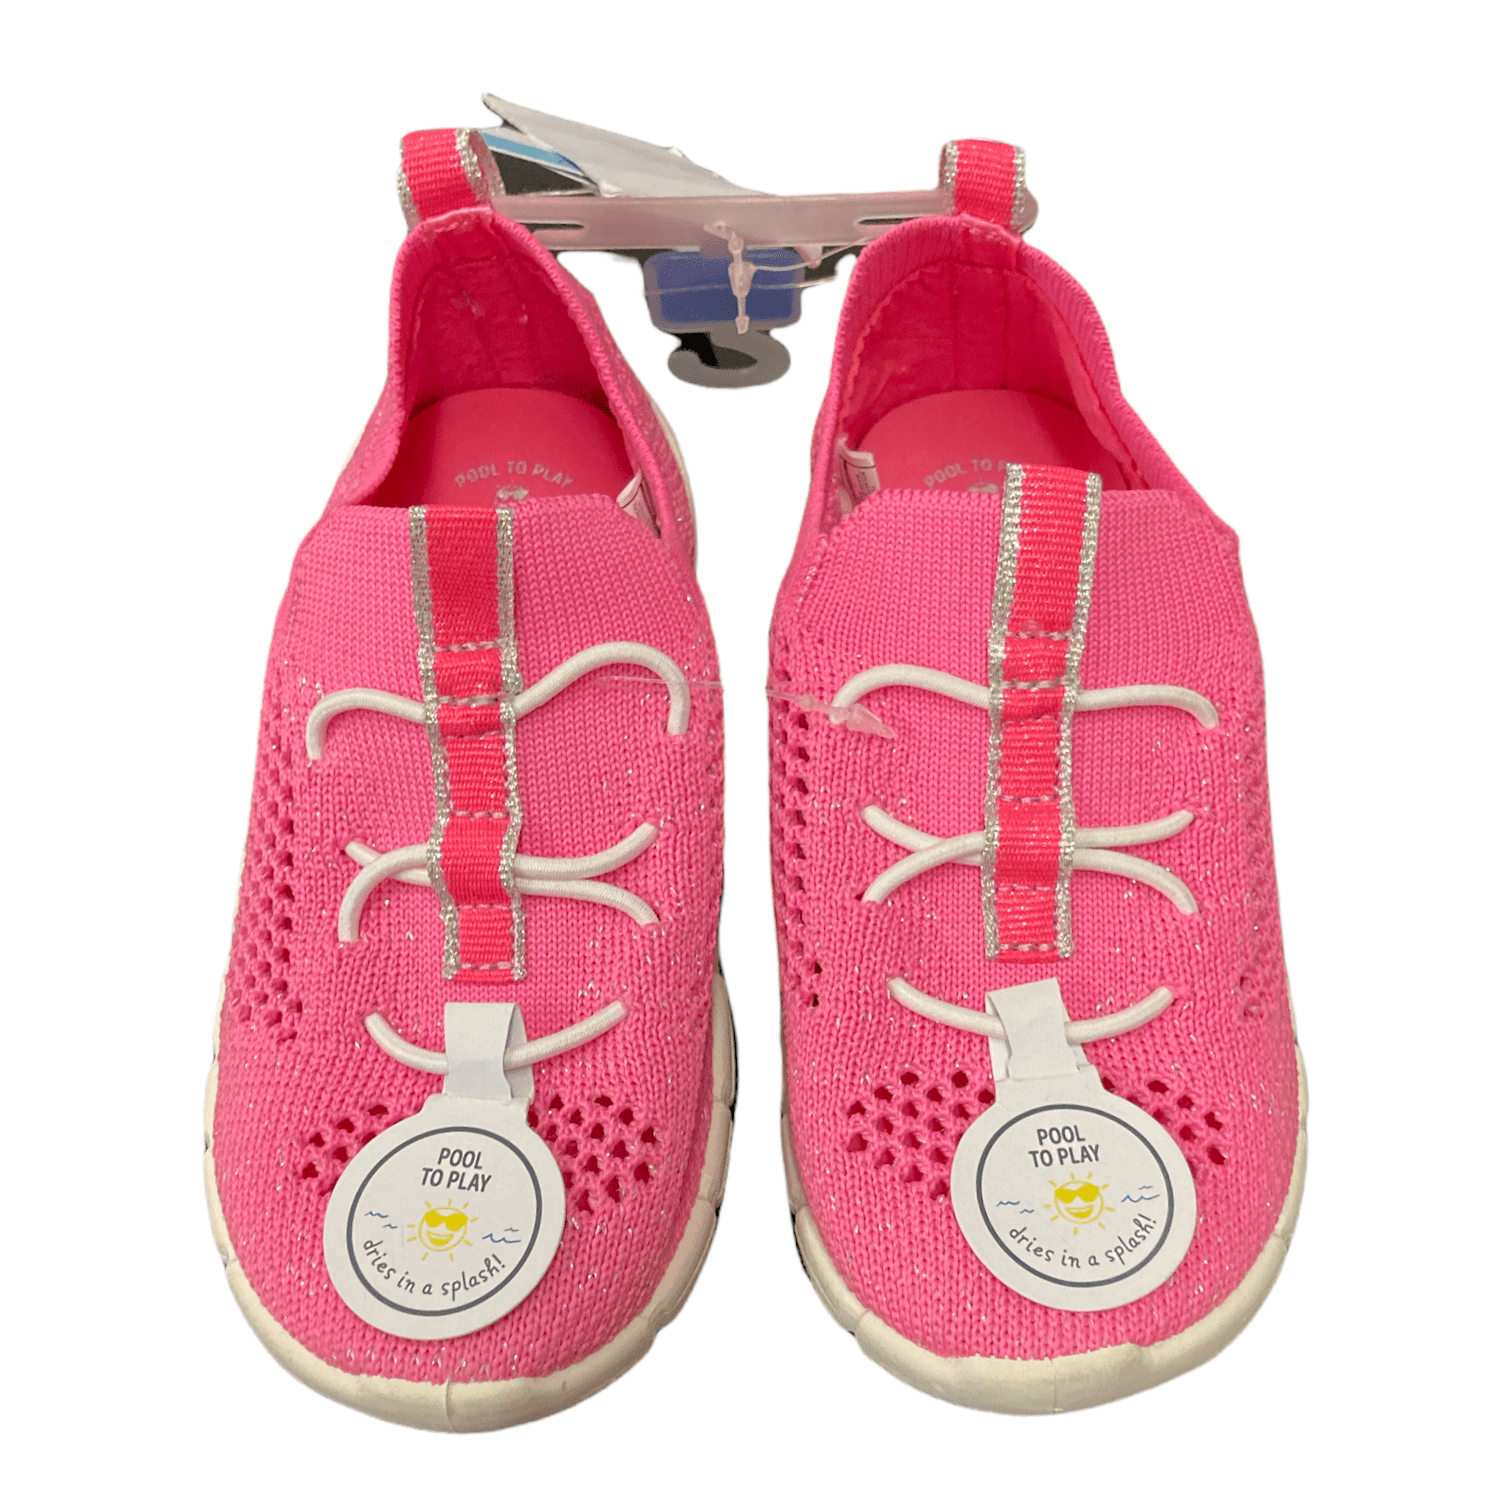 Assorted Sizes Pink Oshkosh B'gosh Tahoe Pool to Play Shoes Toddler Girls 